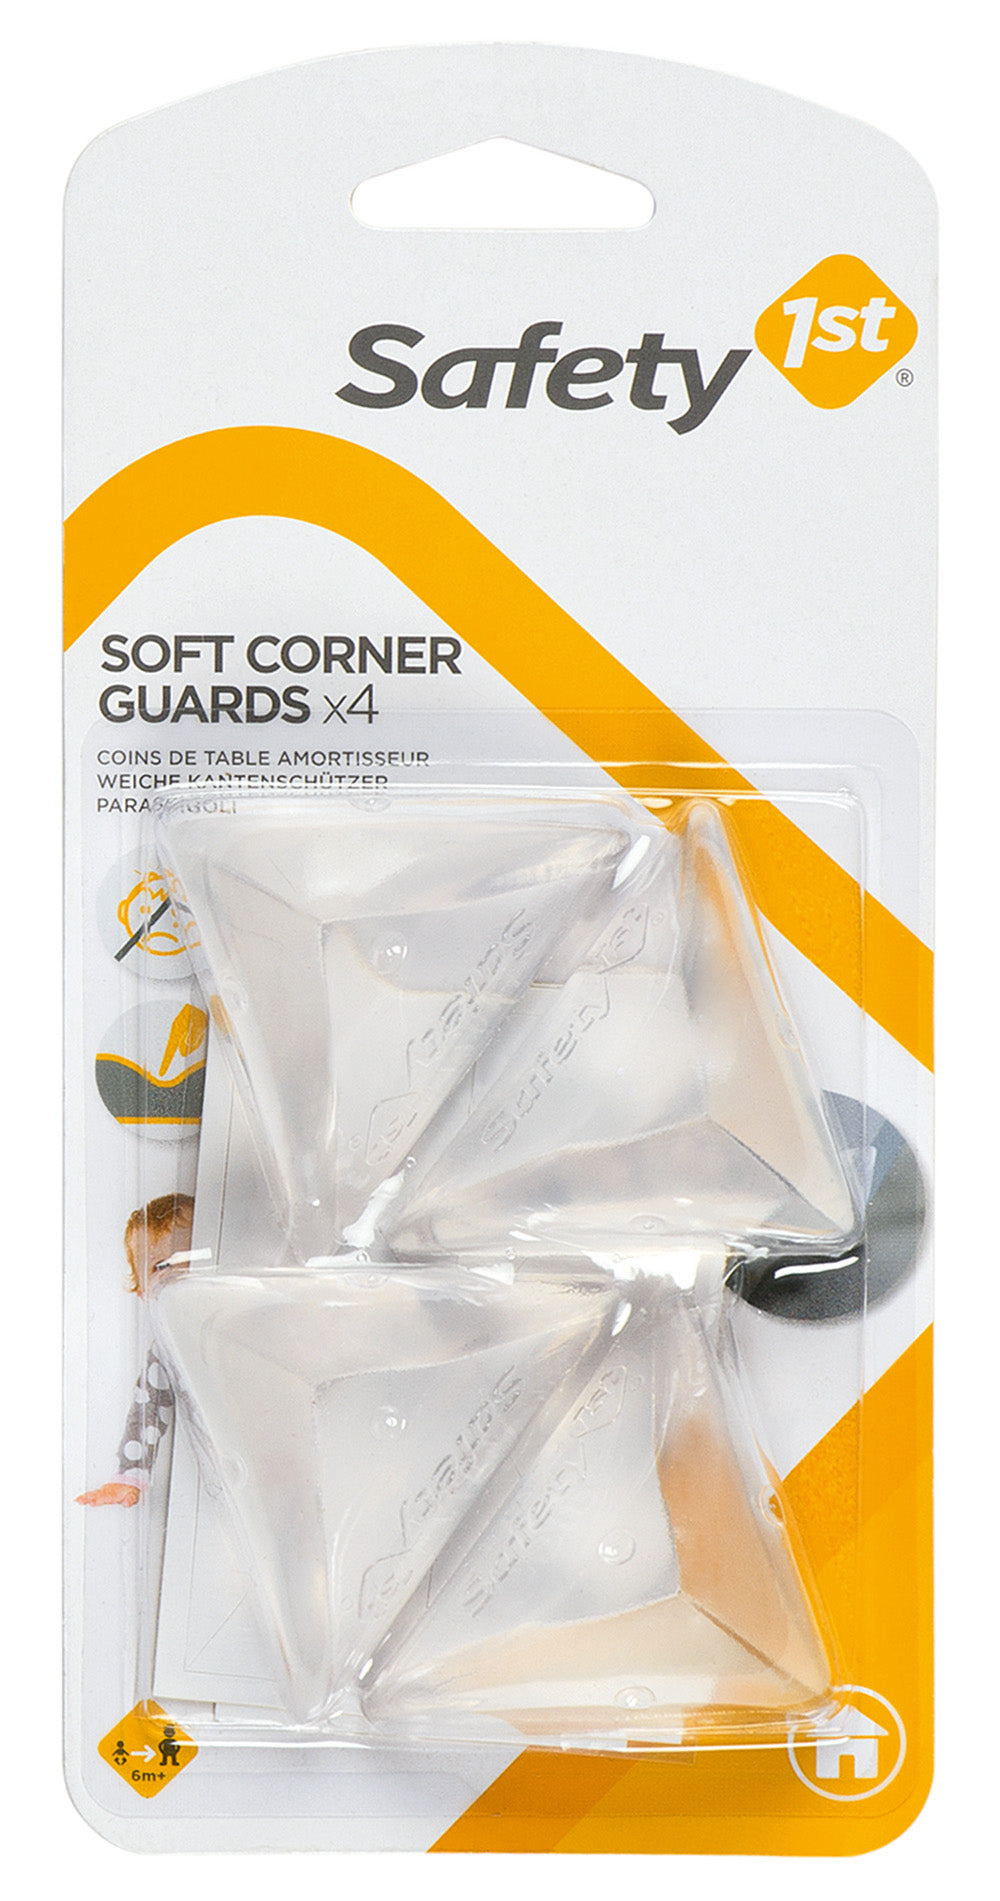 Soft corner guards - 4 Packs